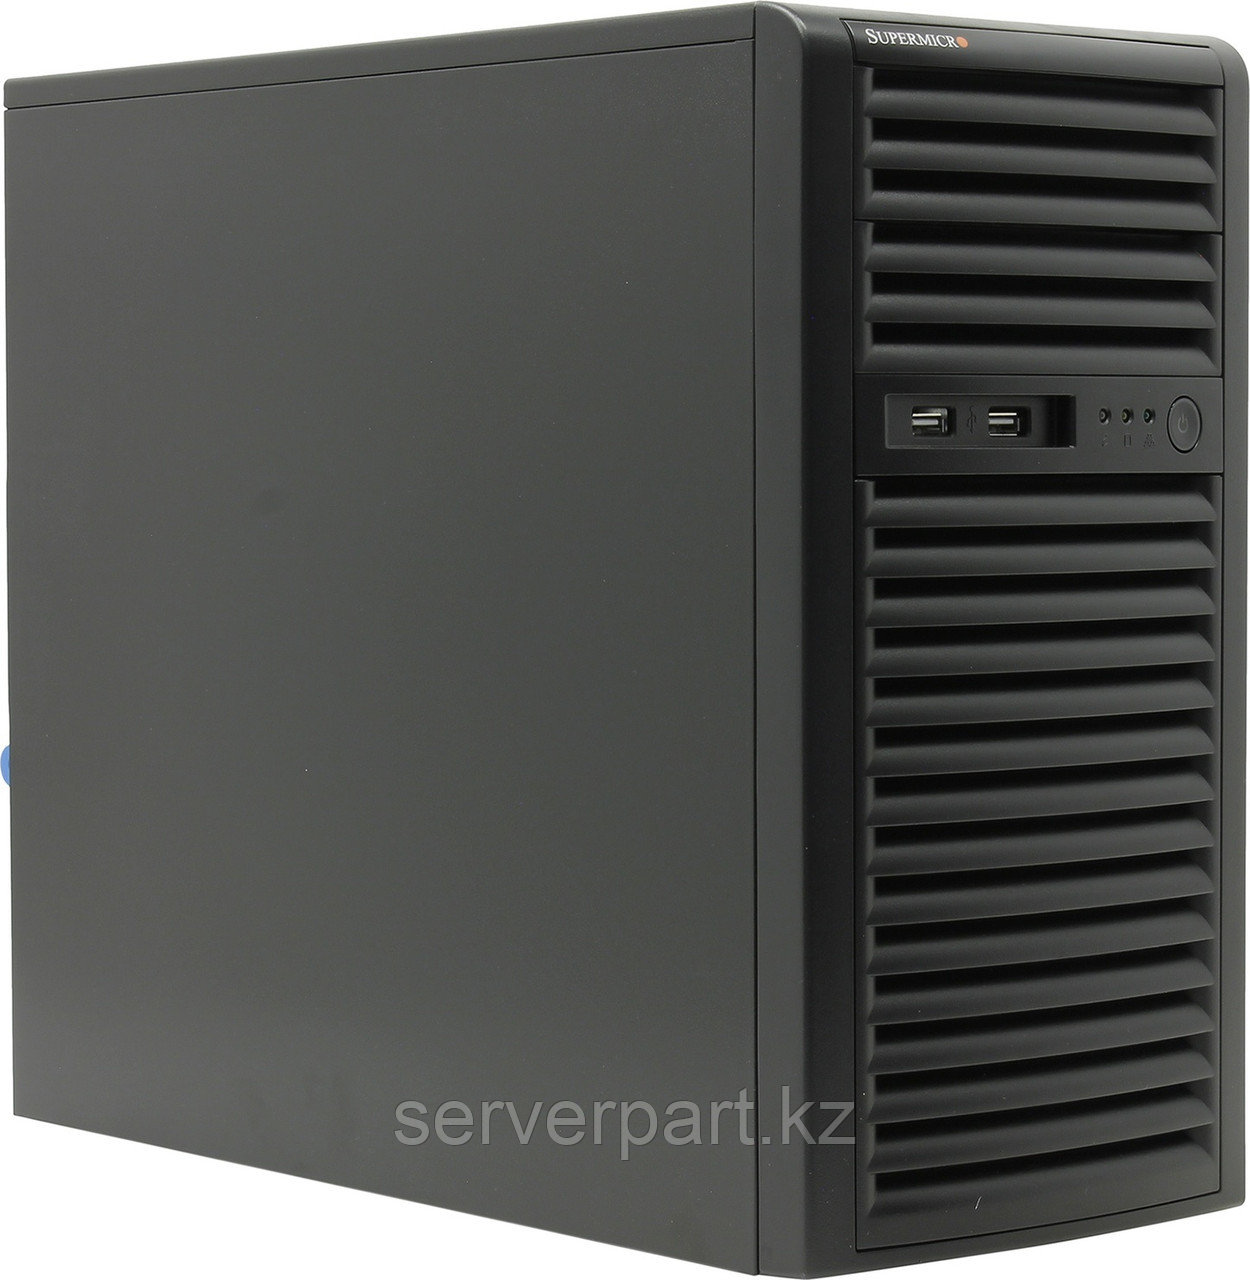 Сервер Supermicro SYS-5039D Tower/4-core intel xeon E3-1220v6 3GHz/16GB UDIMM nECC/1x240GB SSD RI Hyb